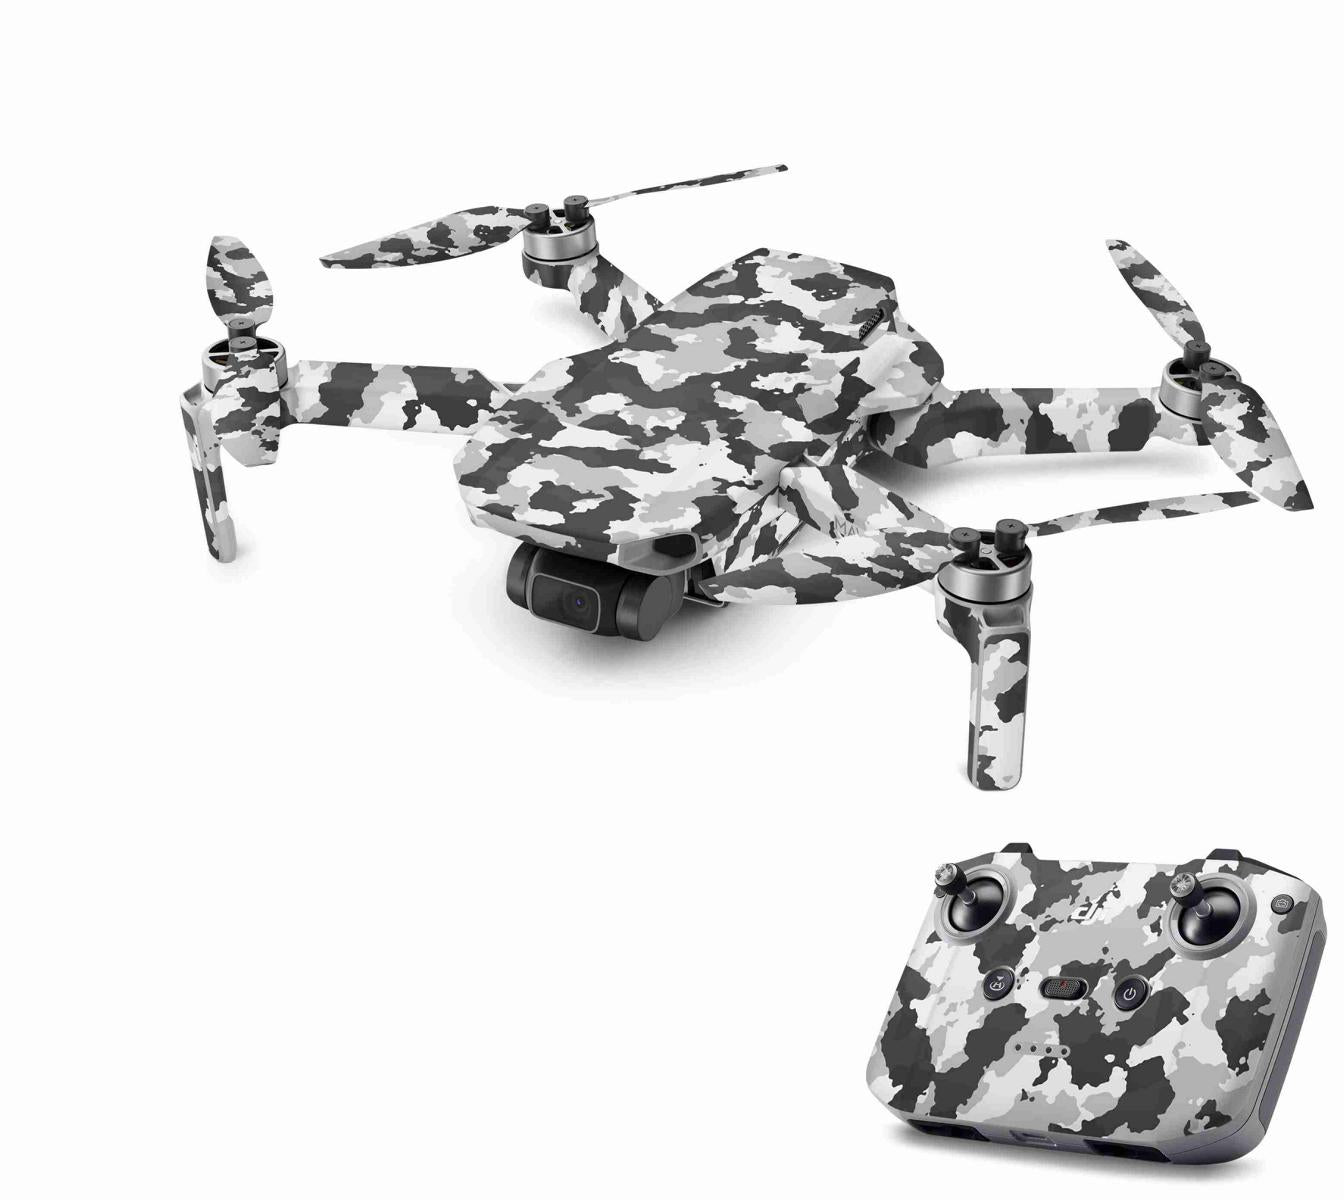 DJI Mini 2 Skins Drohnen Aufkleber Wraps Cover Schutz Folie Elektronik-Sticker & -Aufkleber Skins4u Urban Camo new  